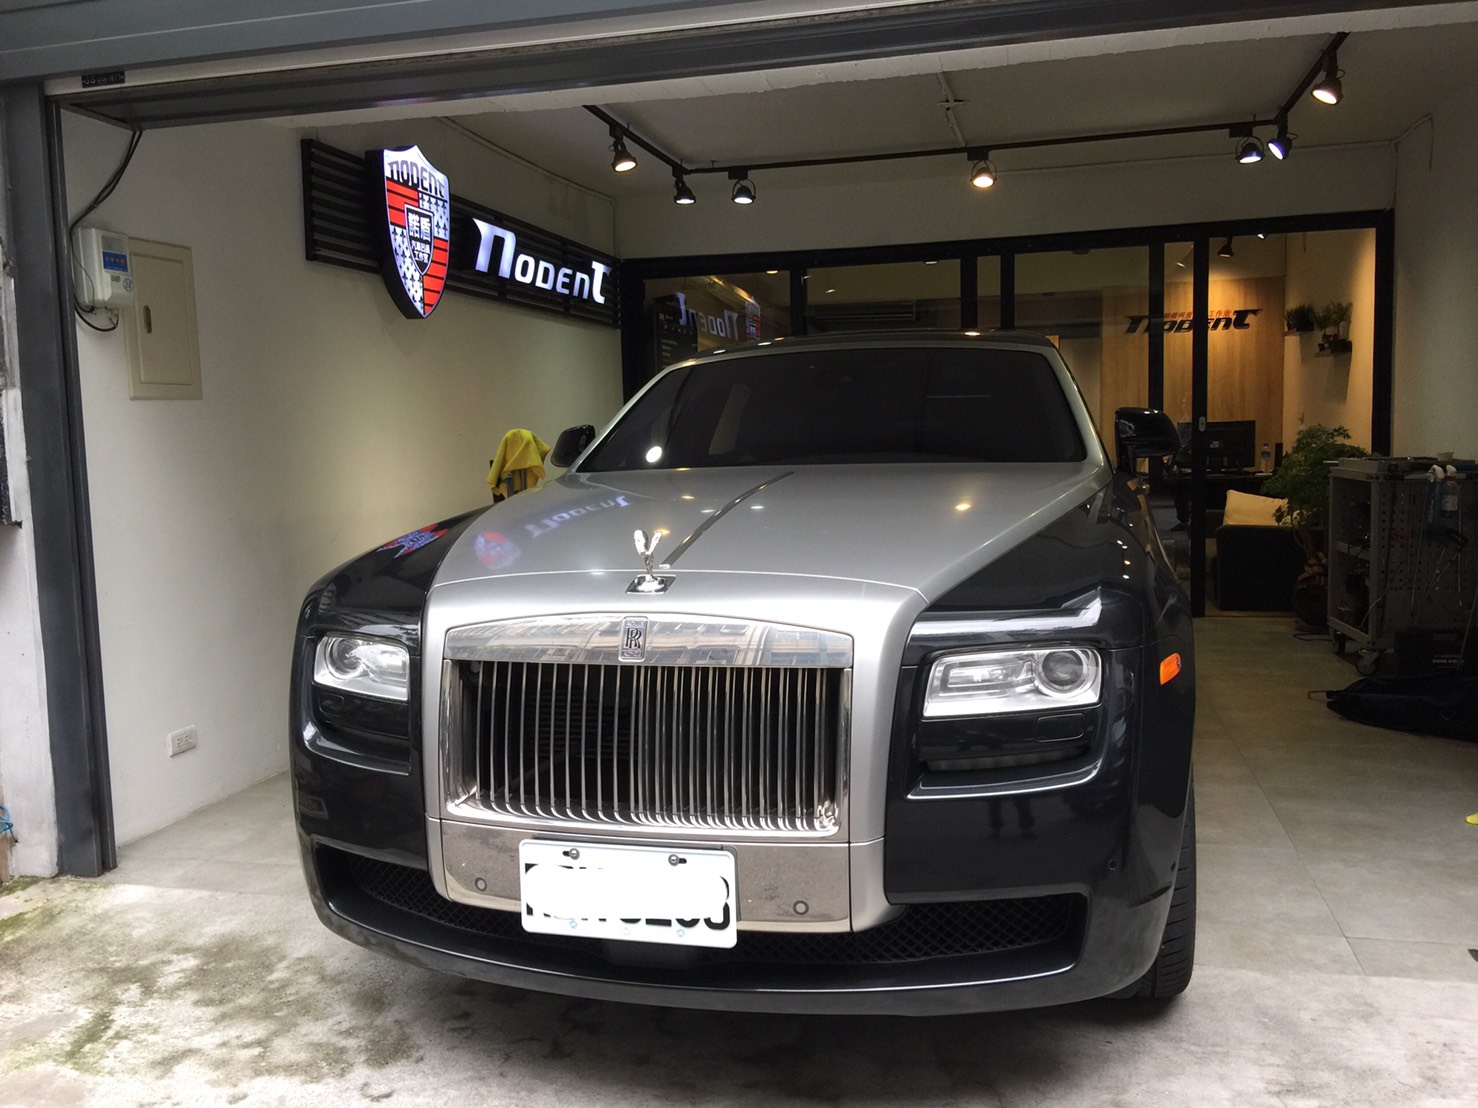 Rolls-Royce phantom 門鈑酒窩修復